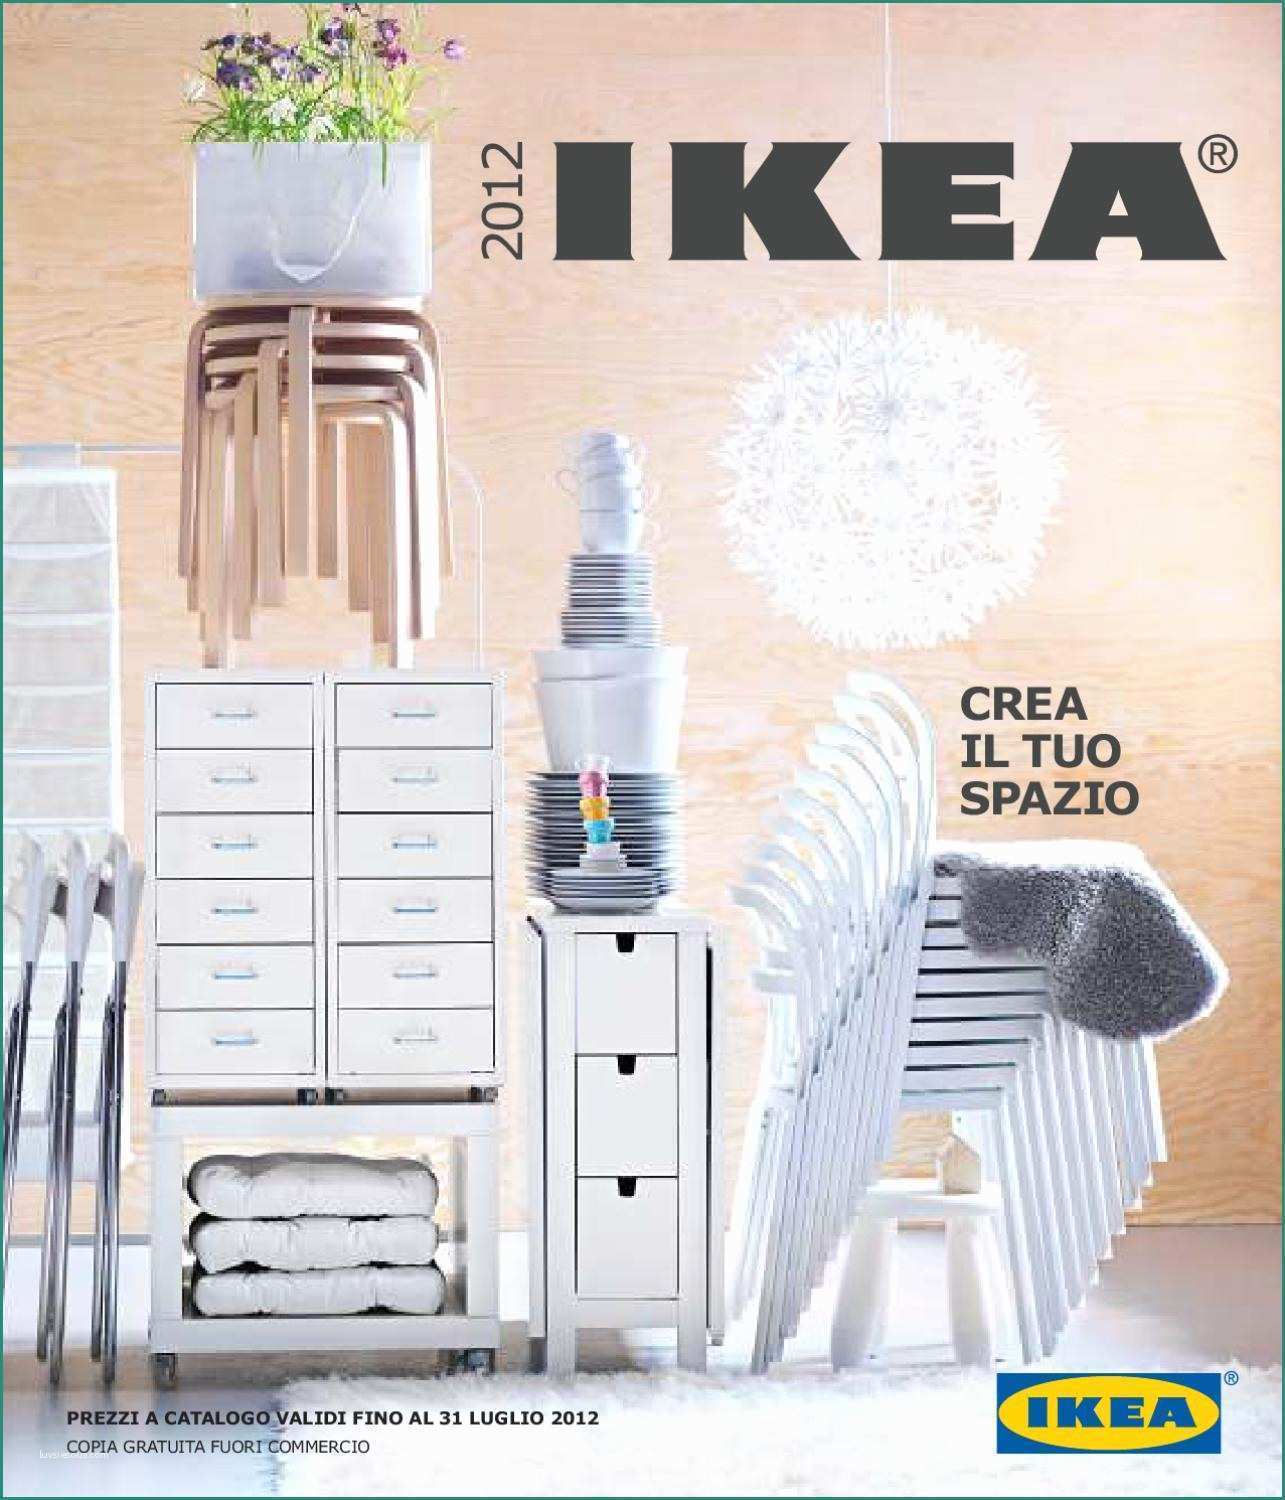 Ikea Galant Scrivania E Catalogo Ikea 2012 by Klikka Laspesa issuu